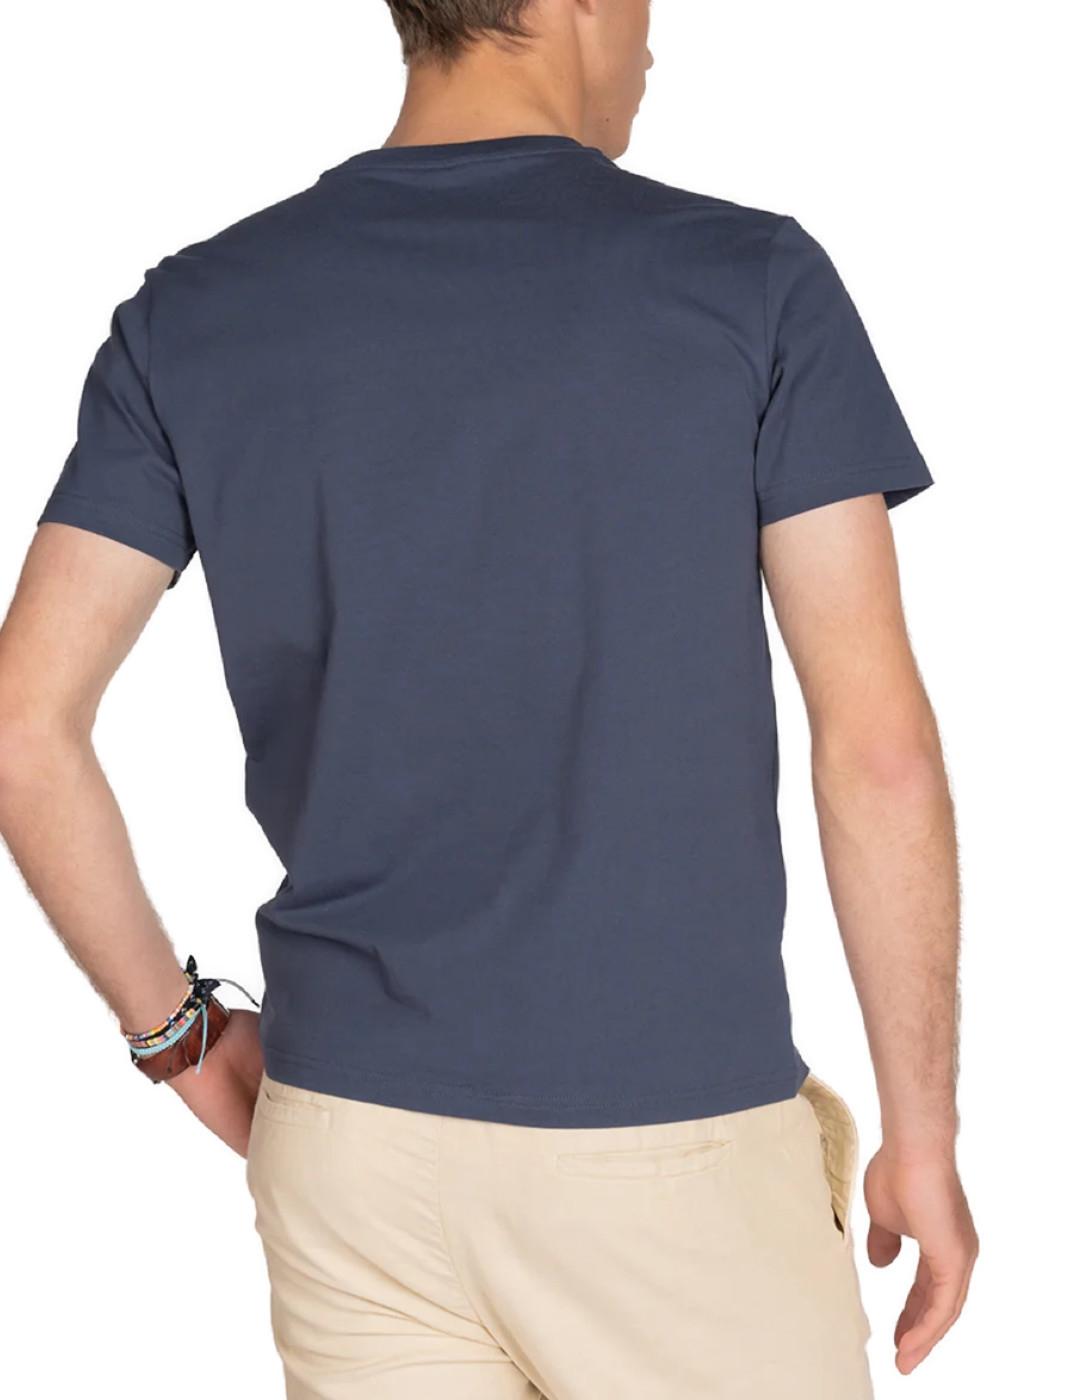 Camiseta Harper Paradise azul marino manga corta para hombre